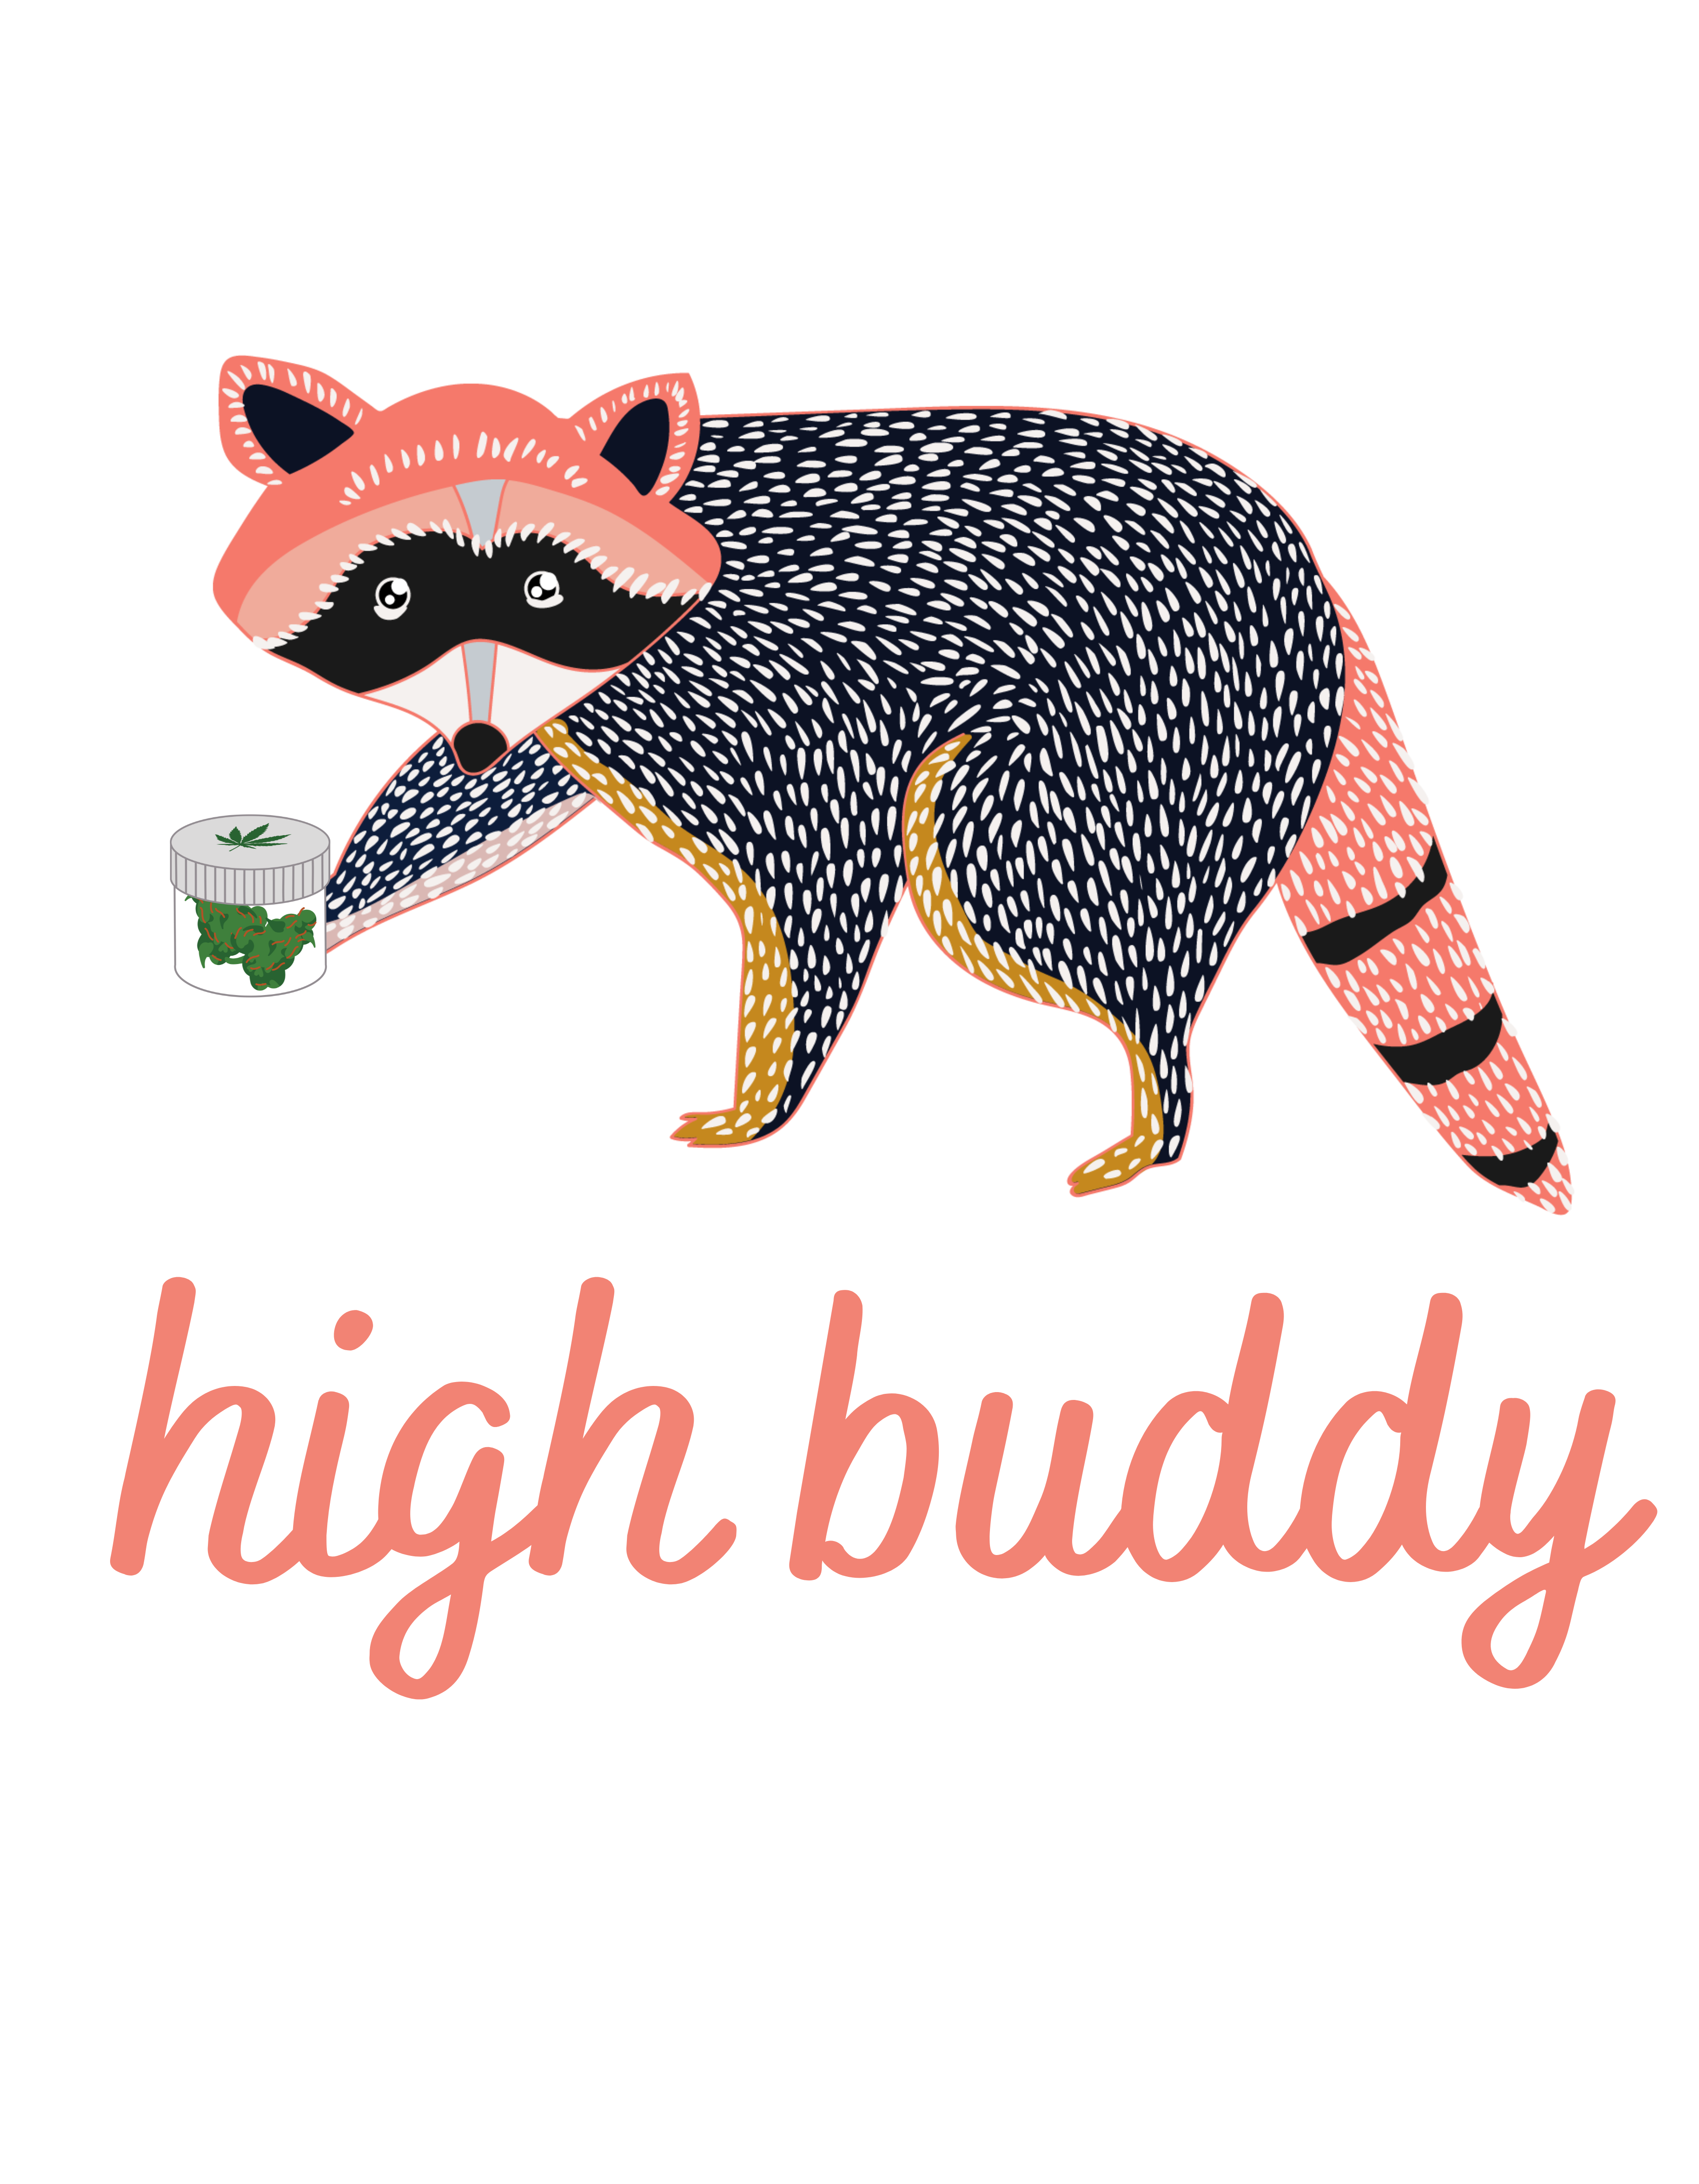 HighBuddy